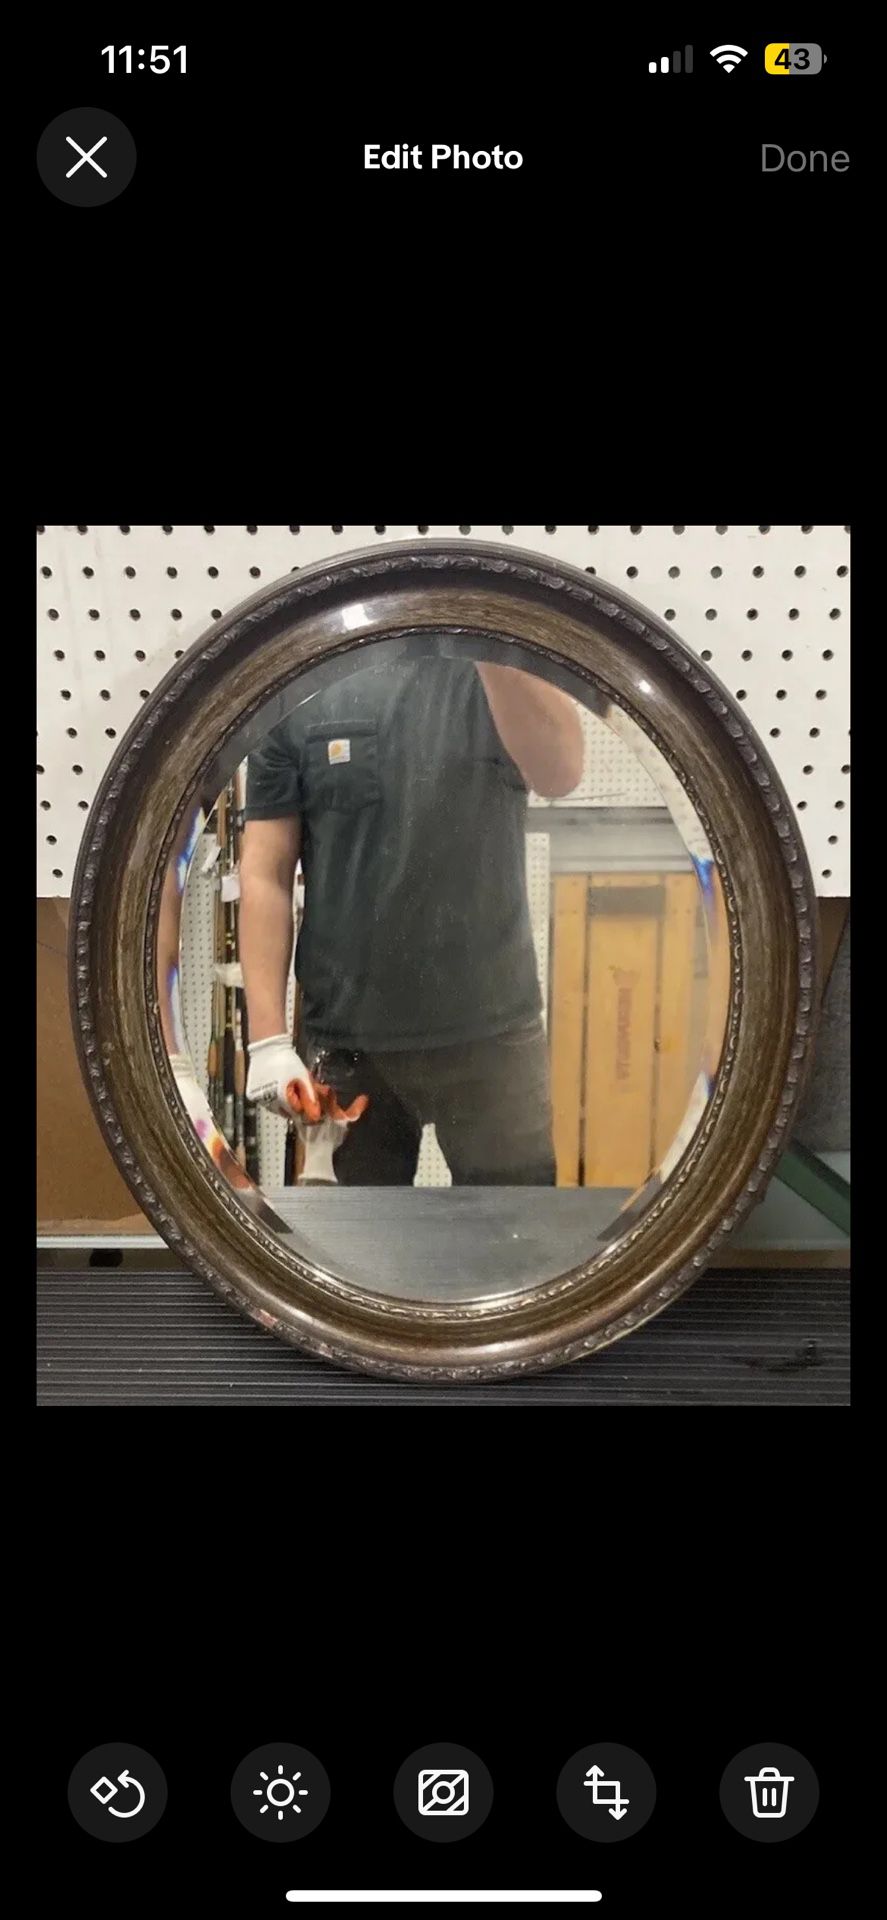 Antique Scumble Finish Oval Mirror